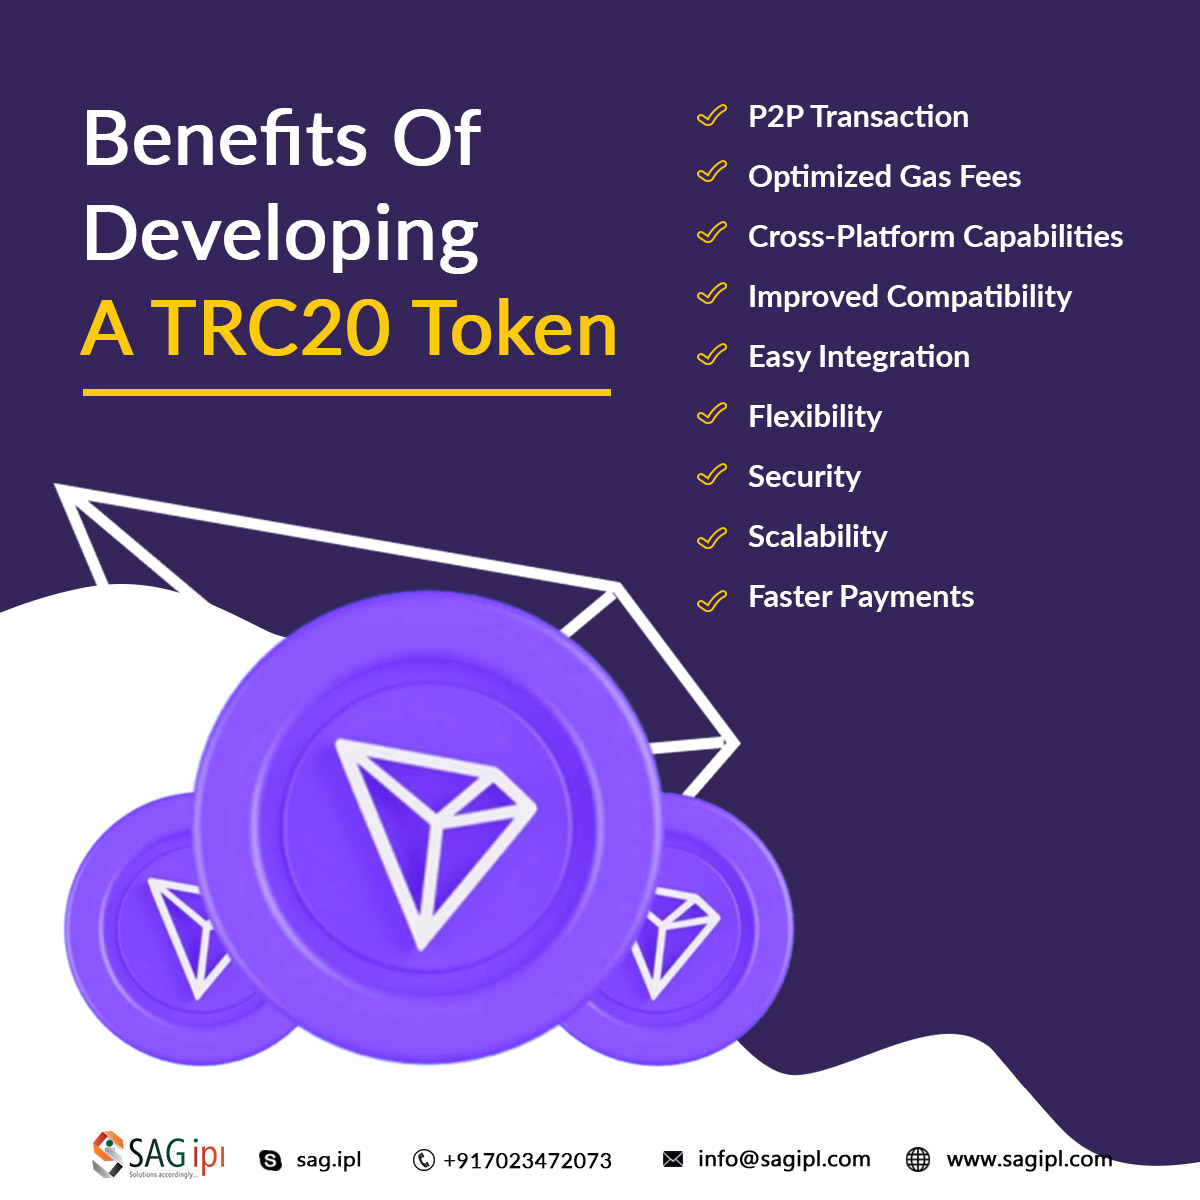 TRC20 Token Developing Benefits